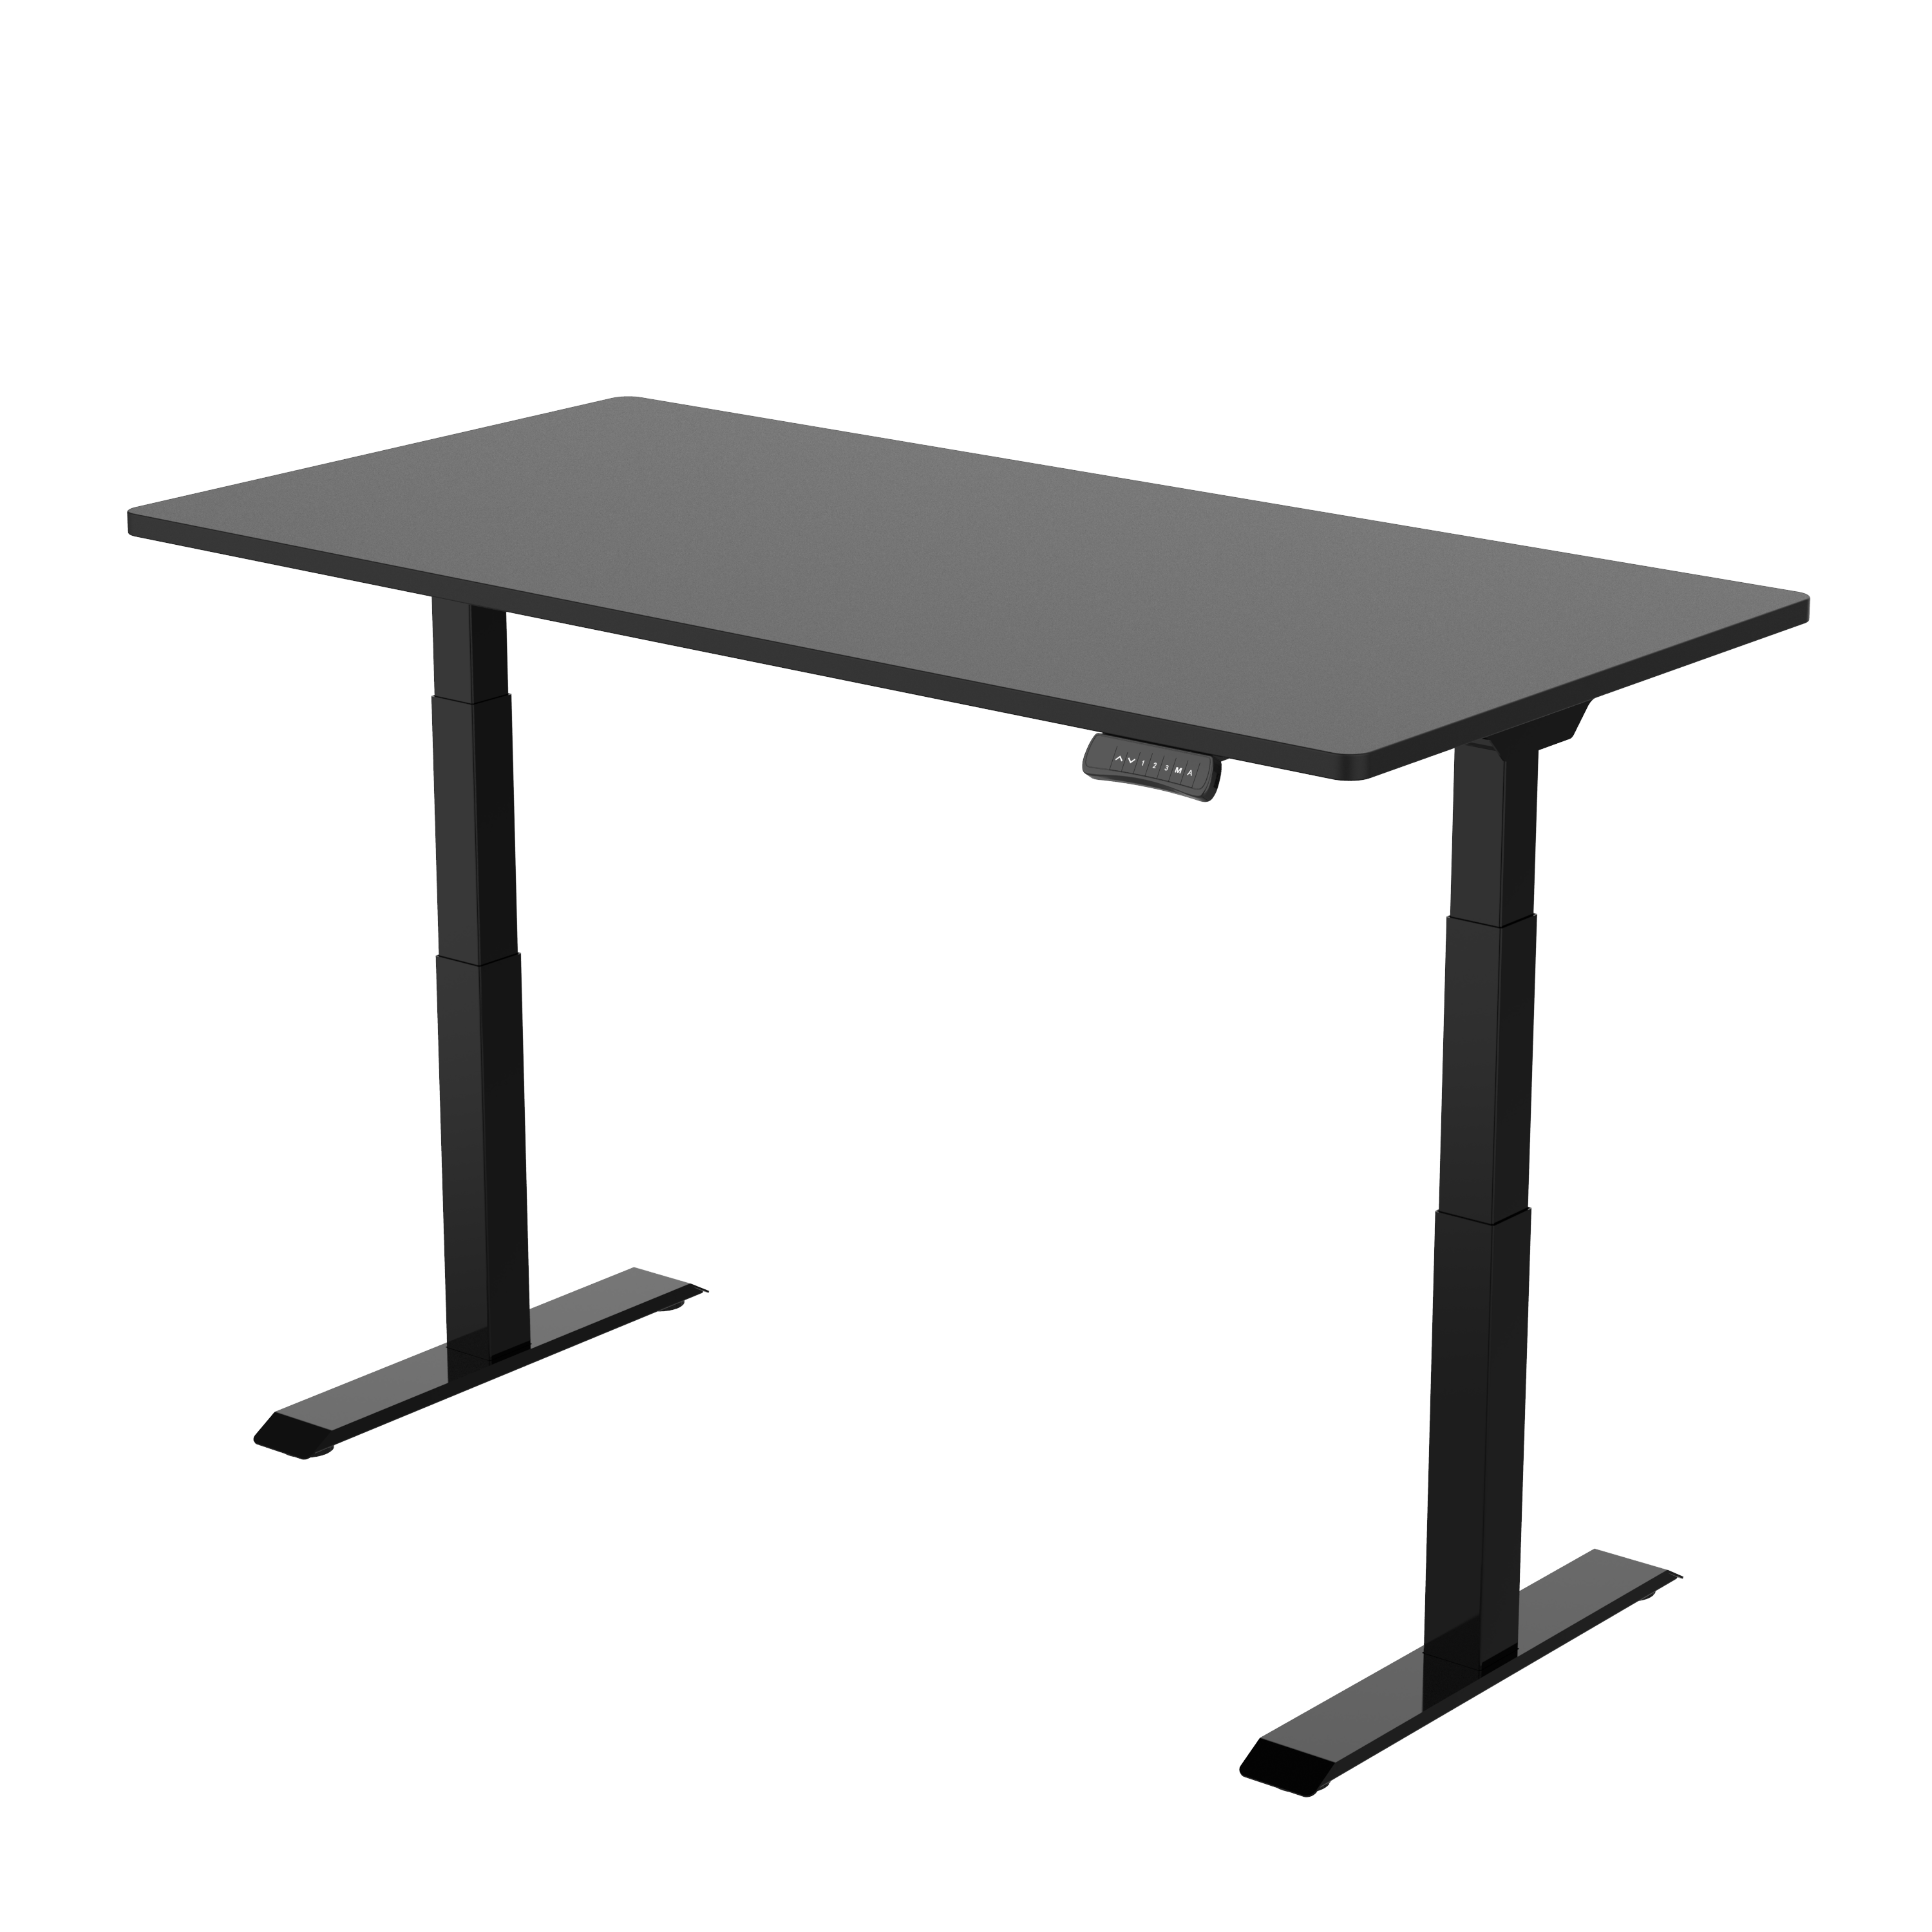 Electric Height Adjustable Desk